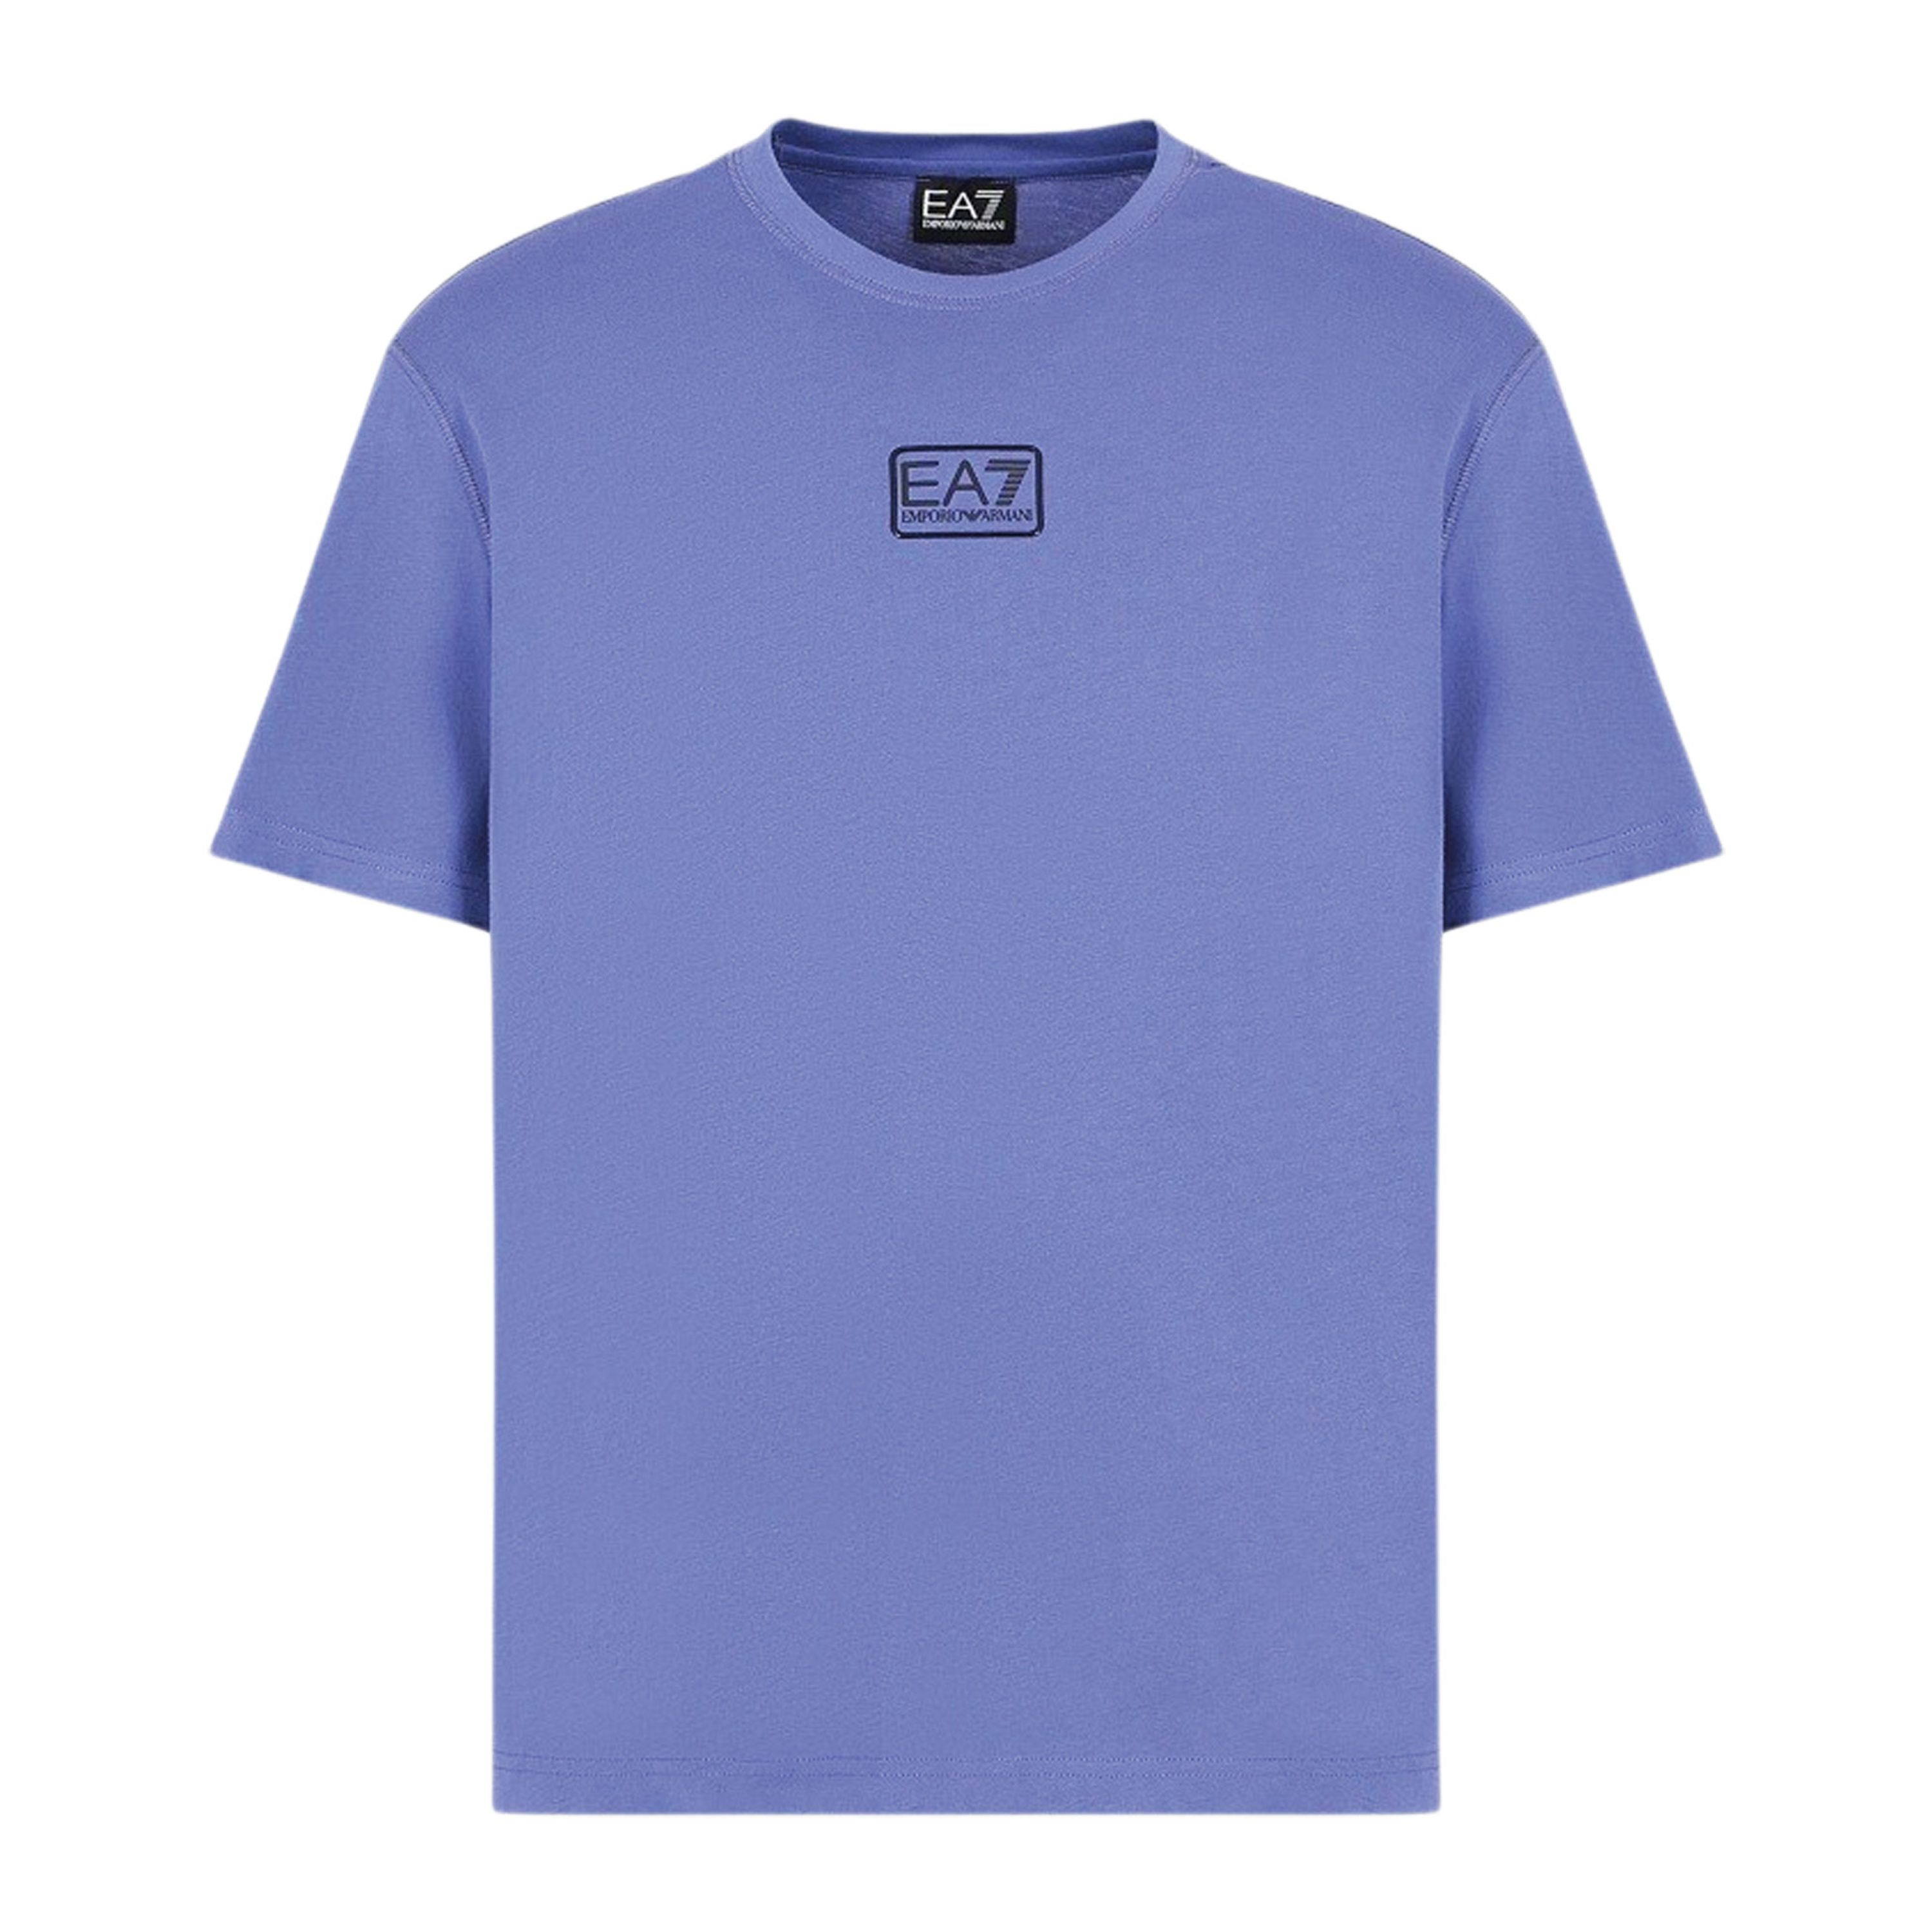 EA7 Core Identity Cotton Shirt Heren